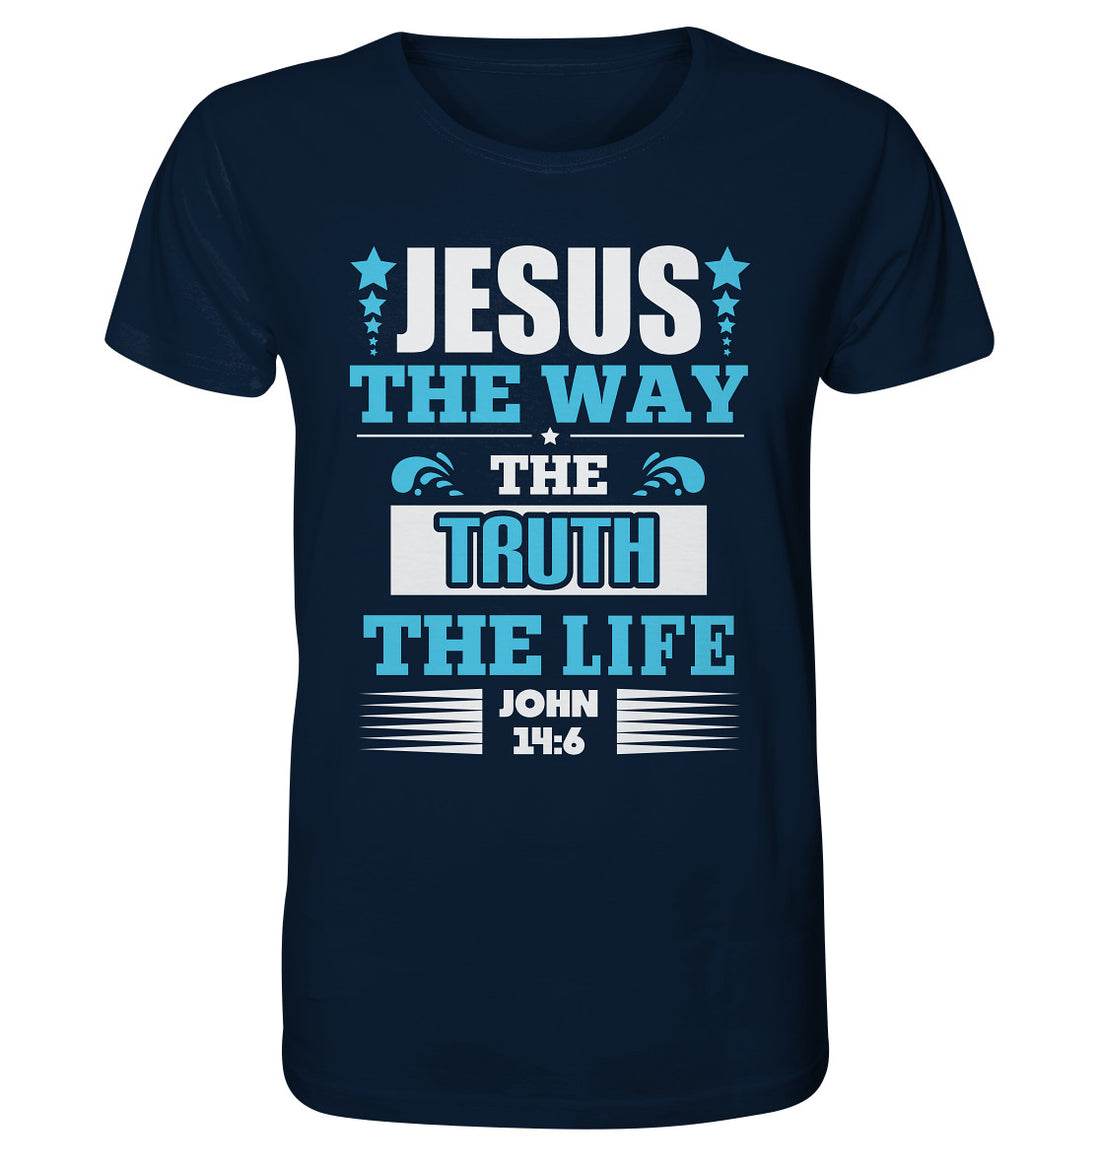 Joh 14,6 - (Way, Truth, Life) - Organic Shirt